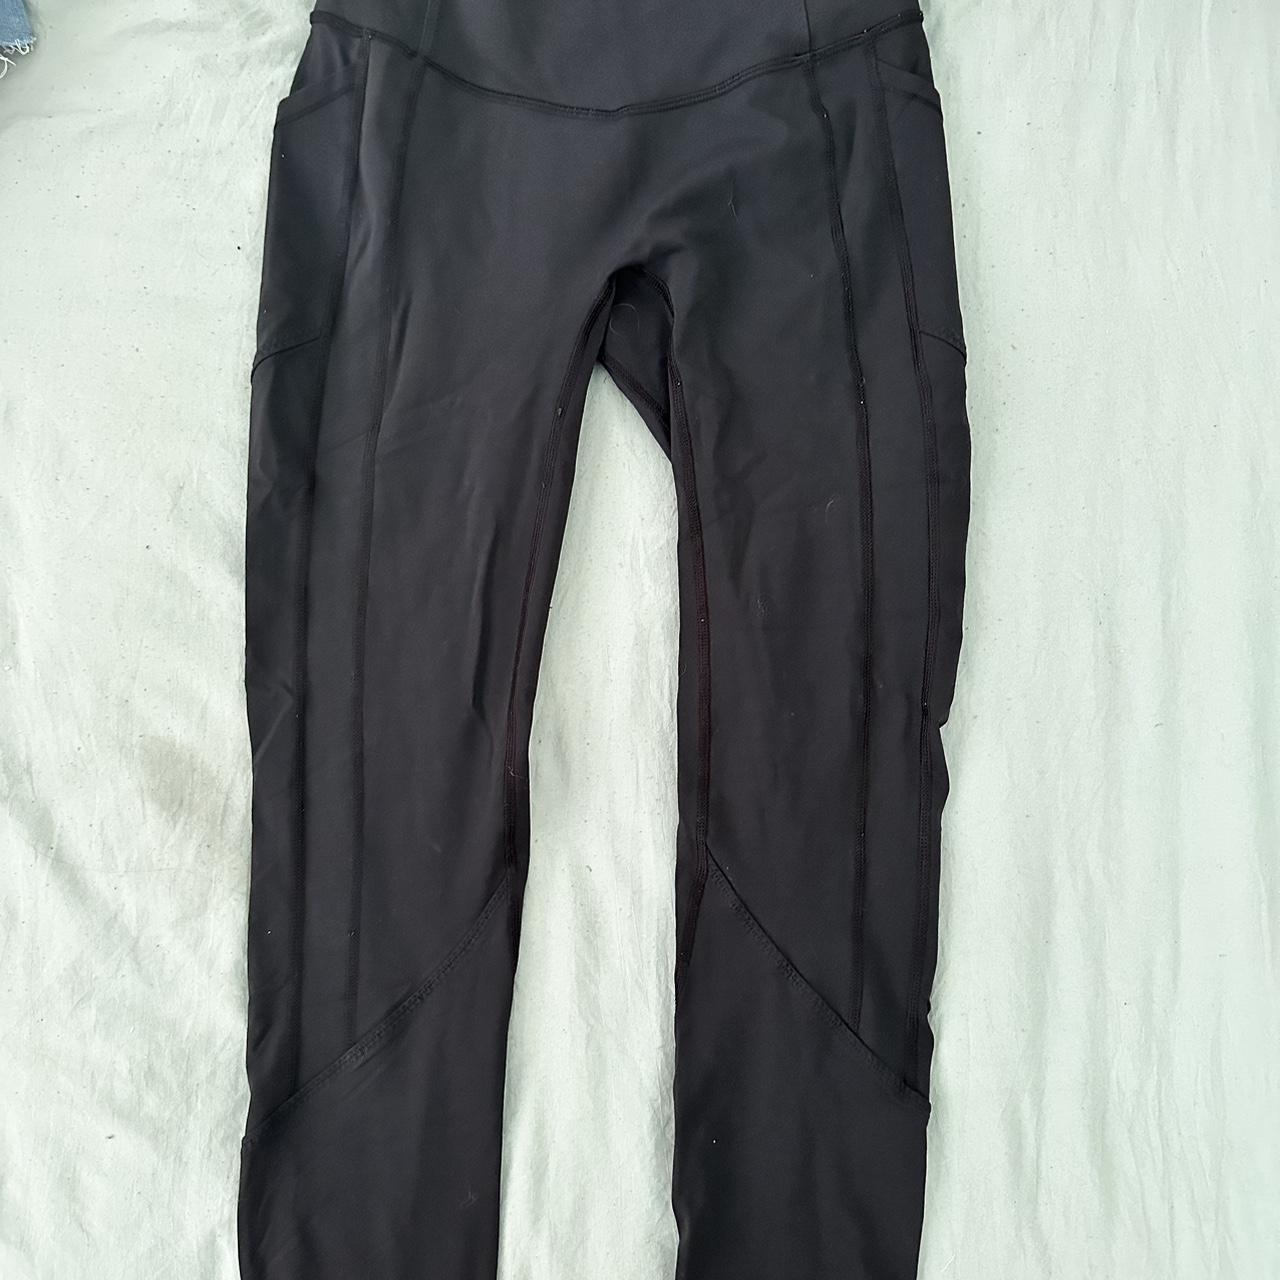 black lululemon leggings with pockets , no tag but